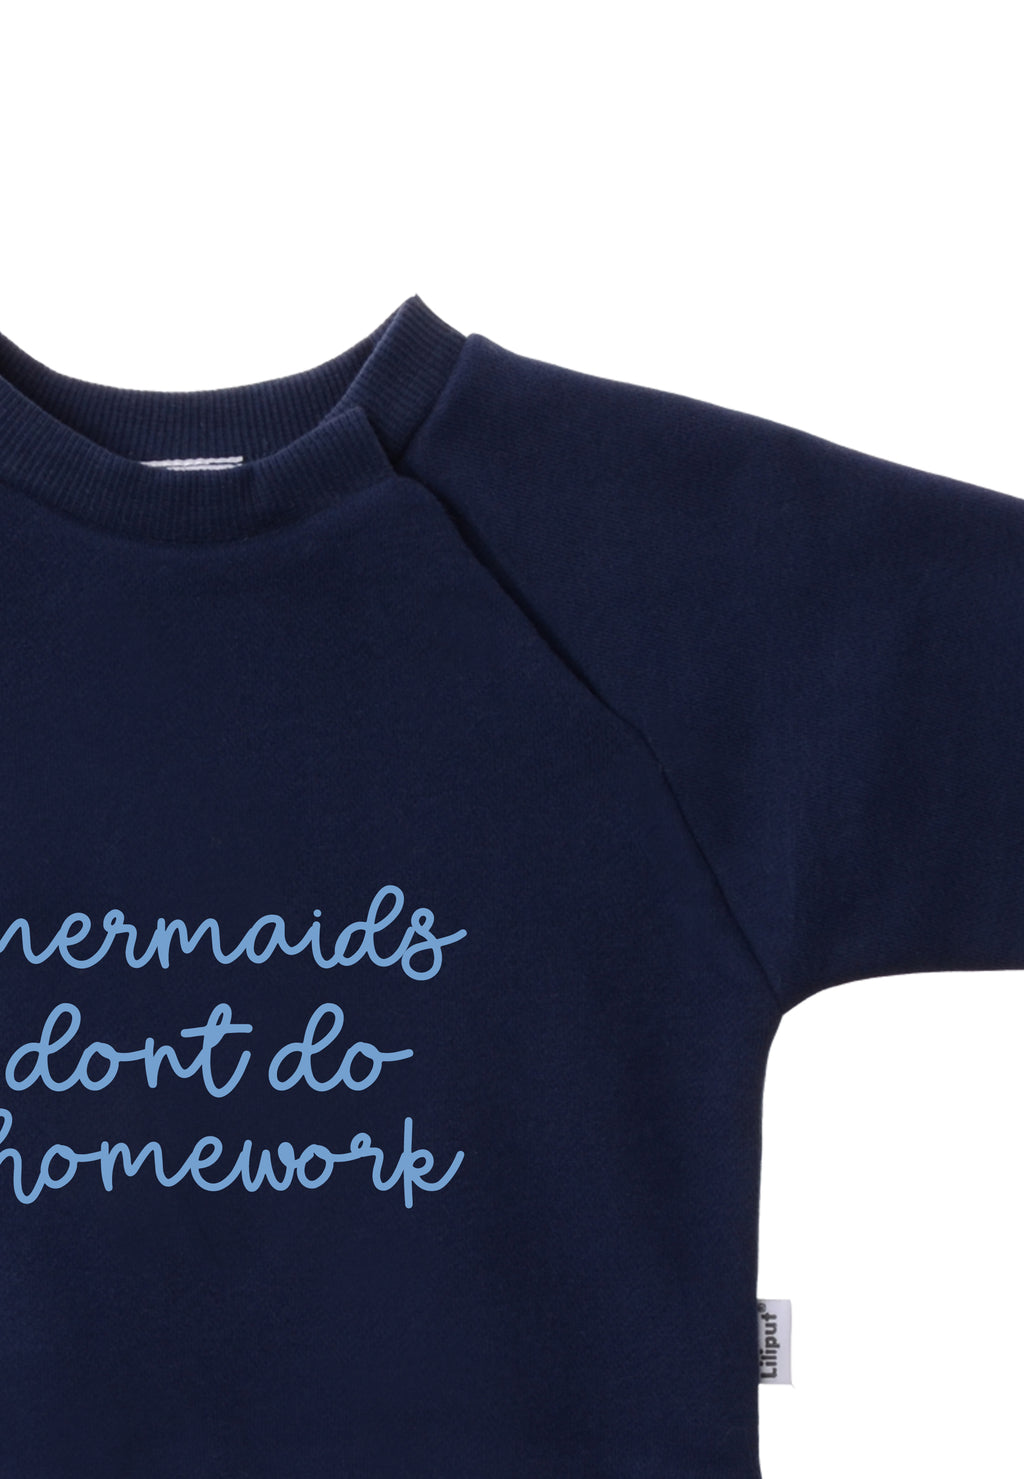 Sweatshirt in blau mit Wording "mermaids dont do homework"